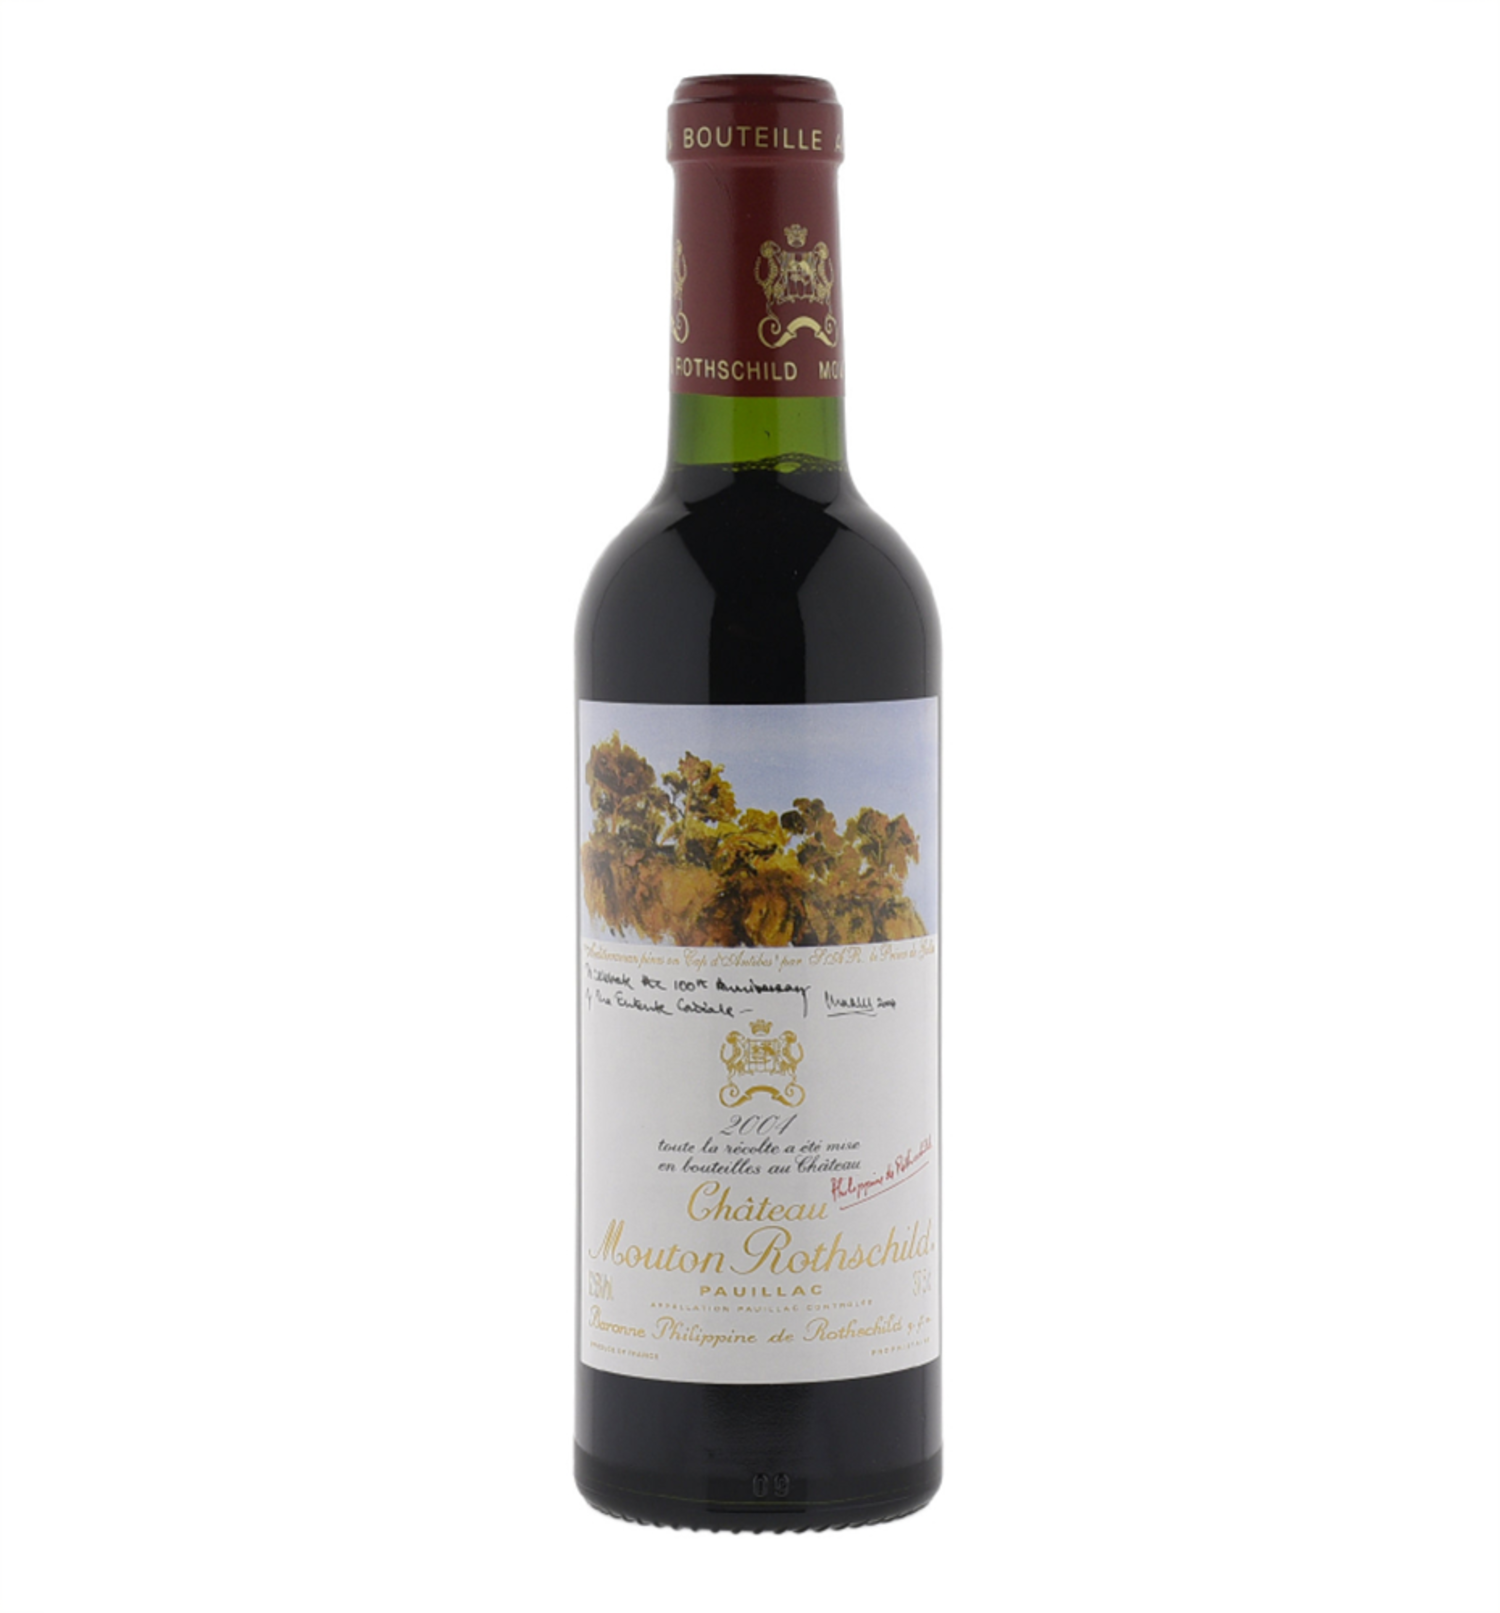 Chateau Mouton Rothschild Bordeaux Red Blend Wine 2004 $389